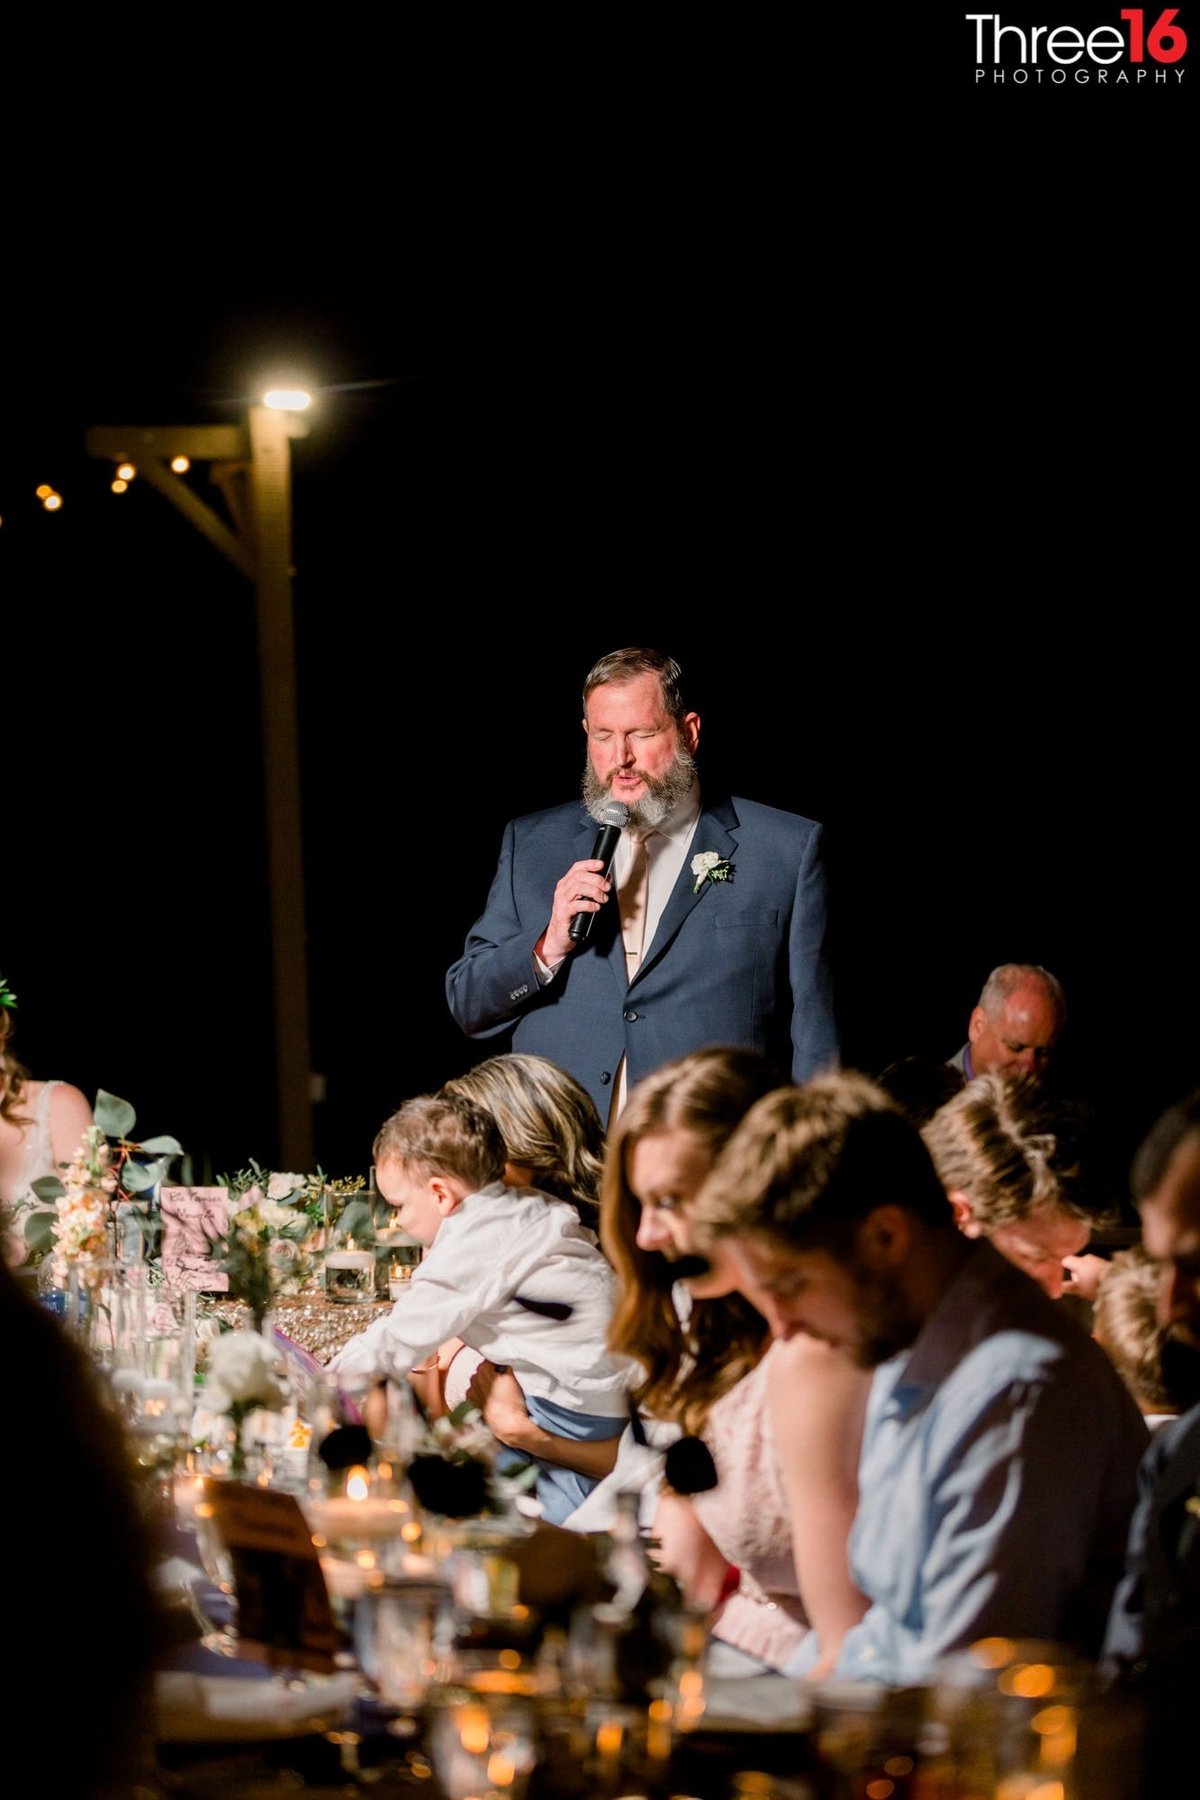 Dinner Prayer being said at a wedding reception